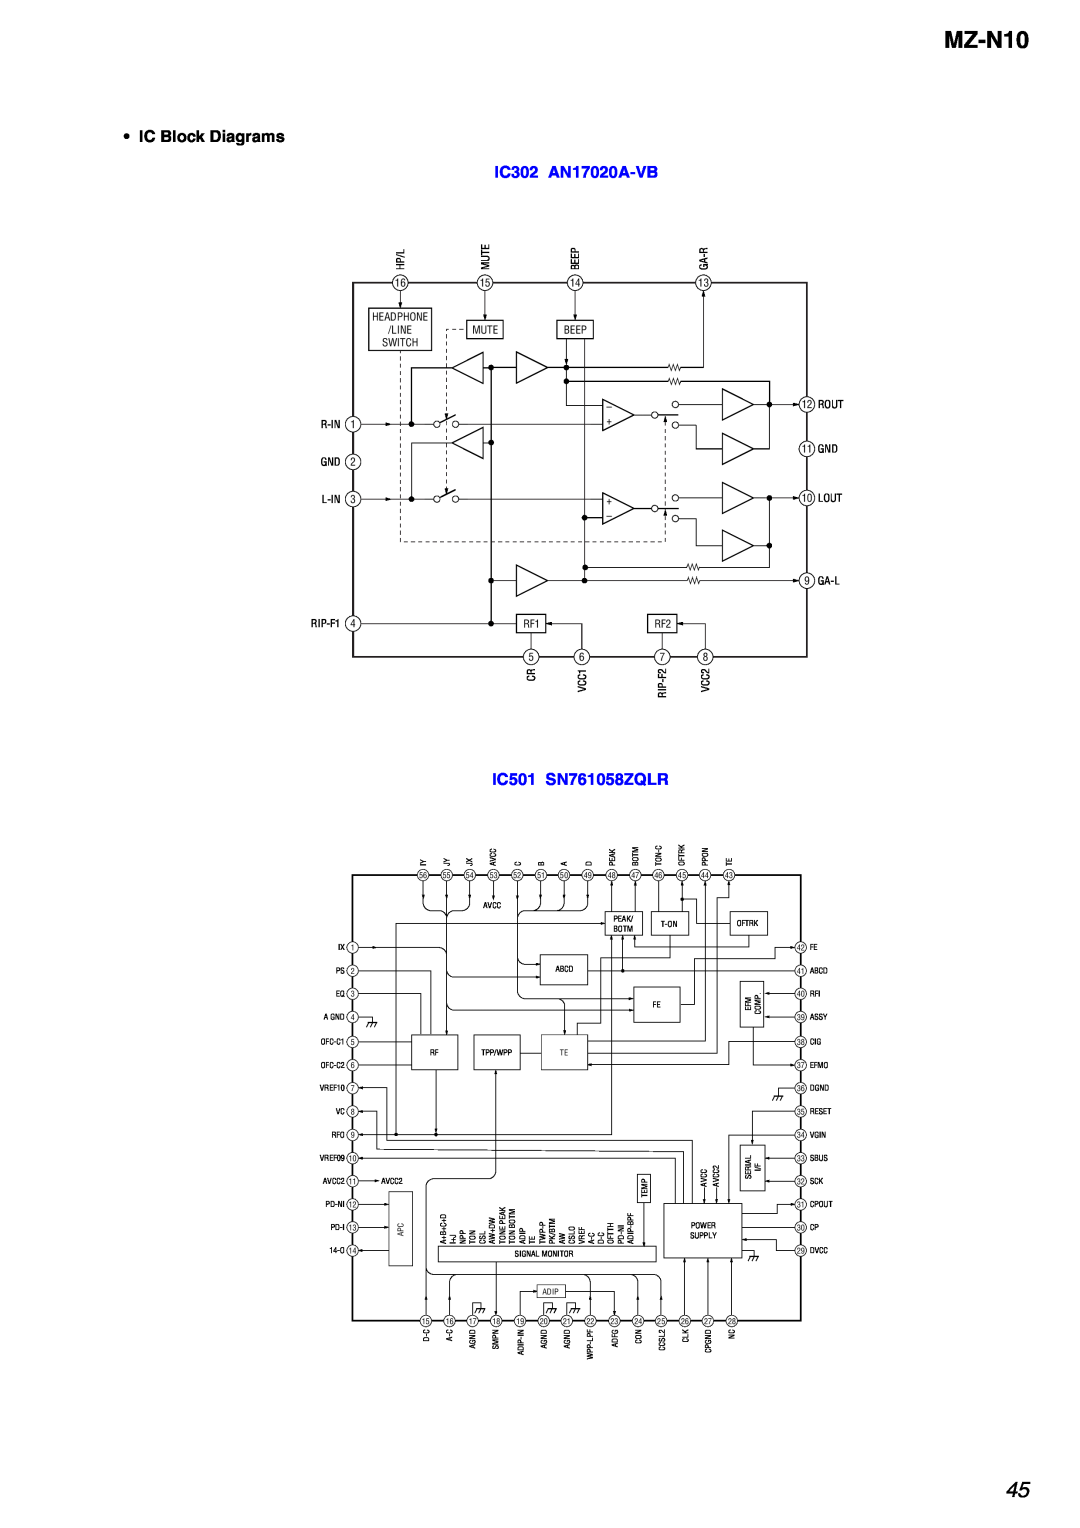 Sony MZ-N10 service manual IC Block Diagrams, IC302 AN17020A-VB, IC501 SN761058ZQLR 